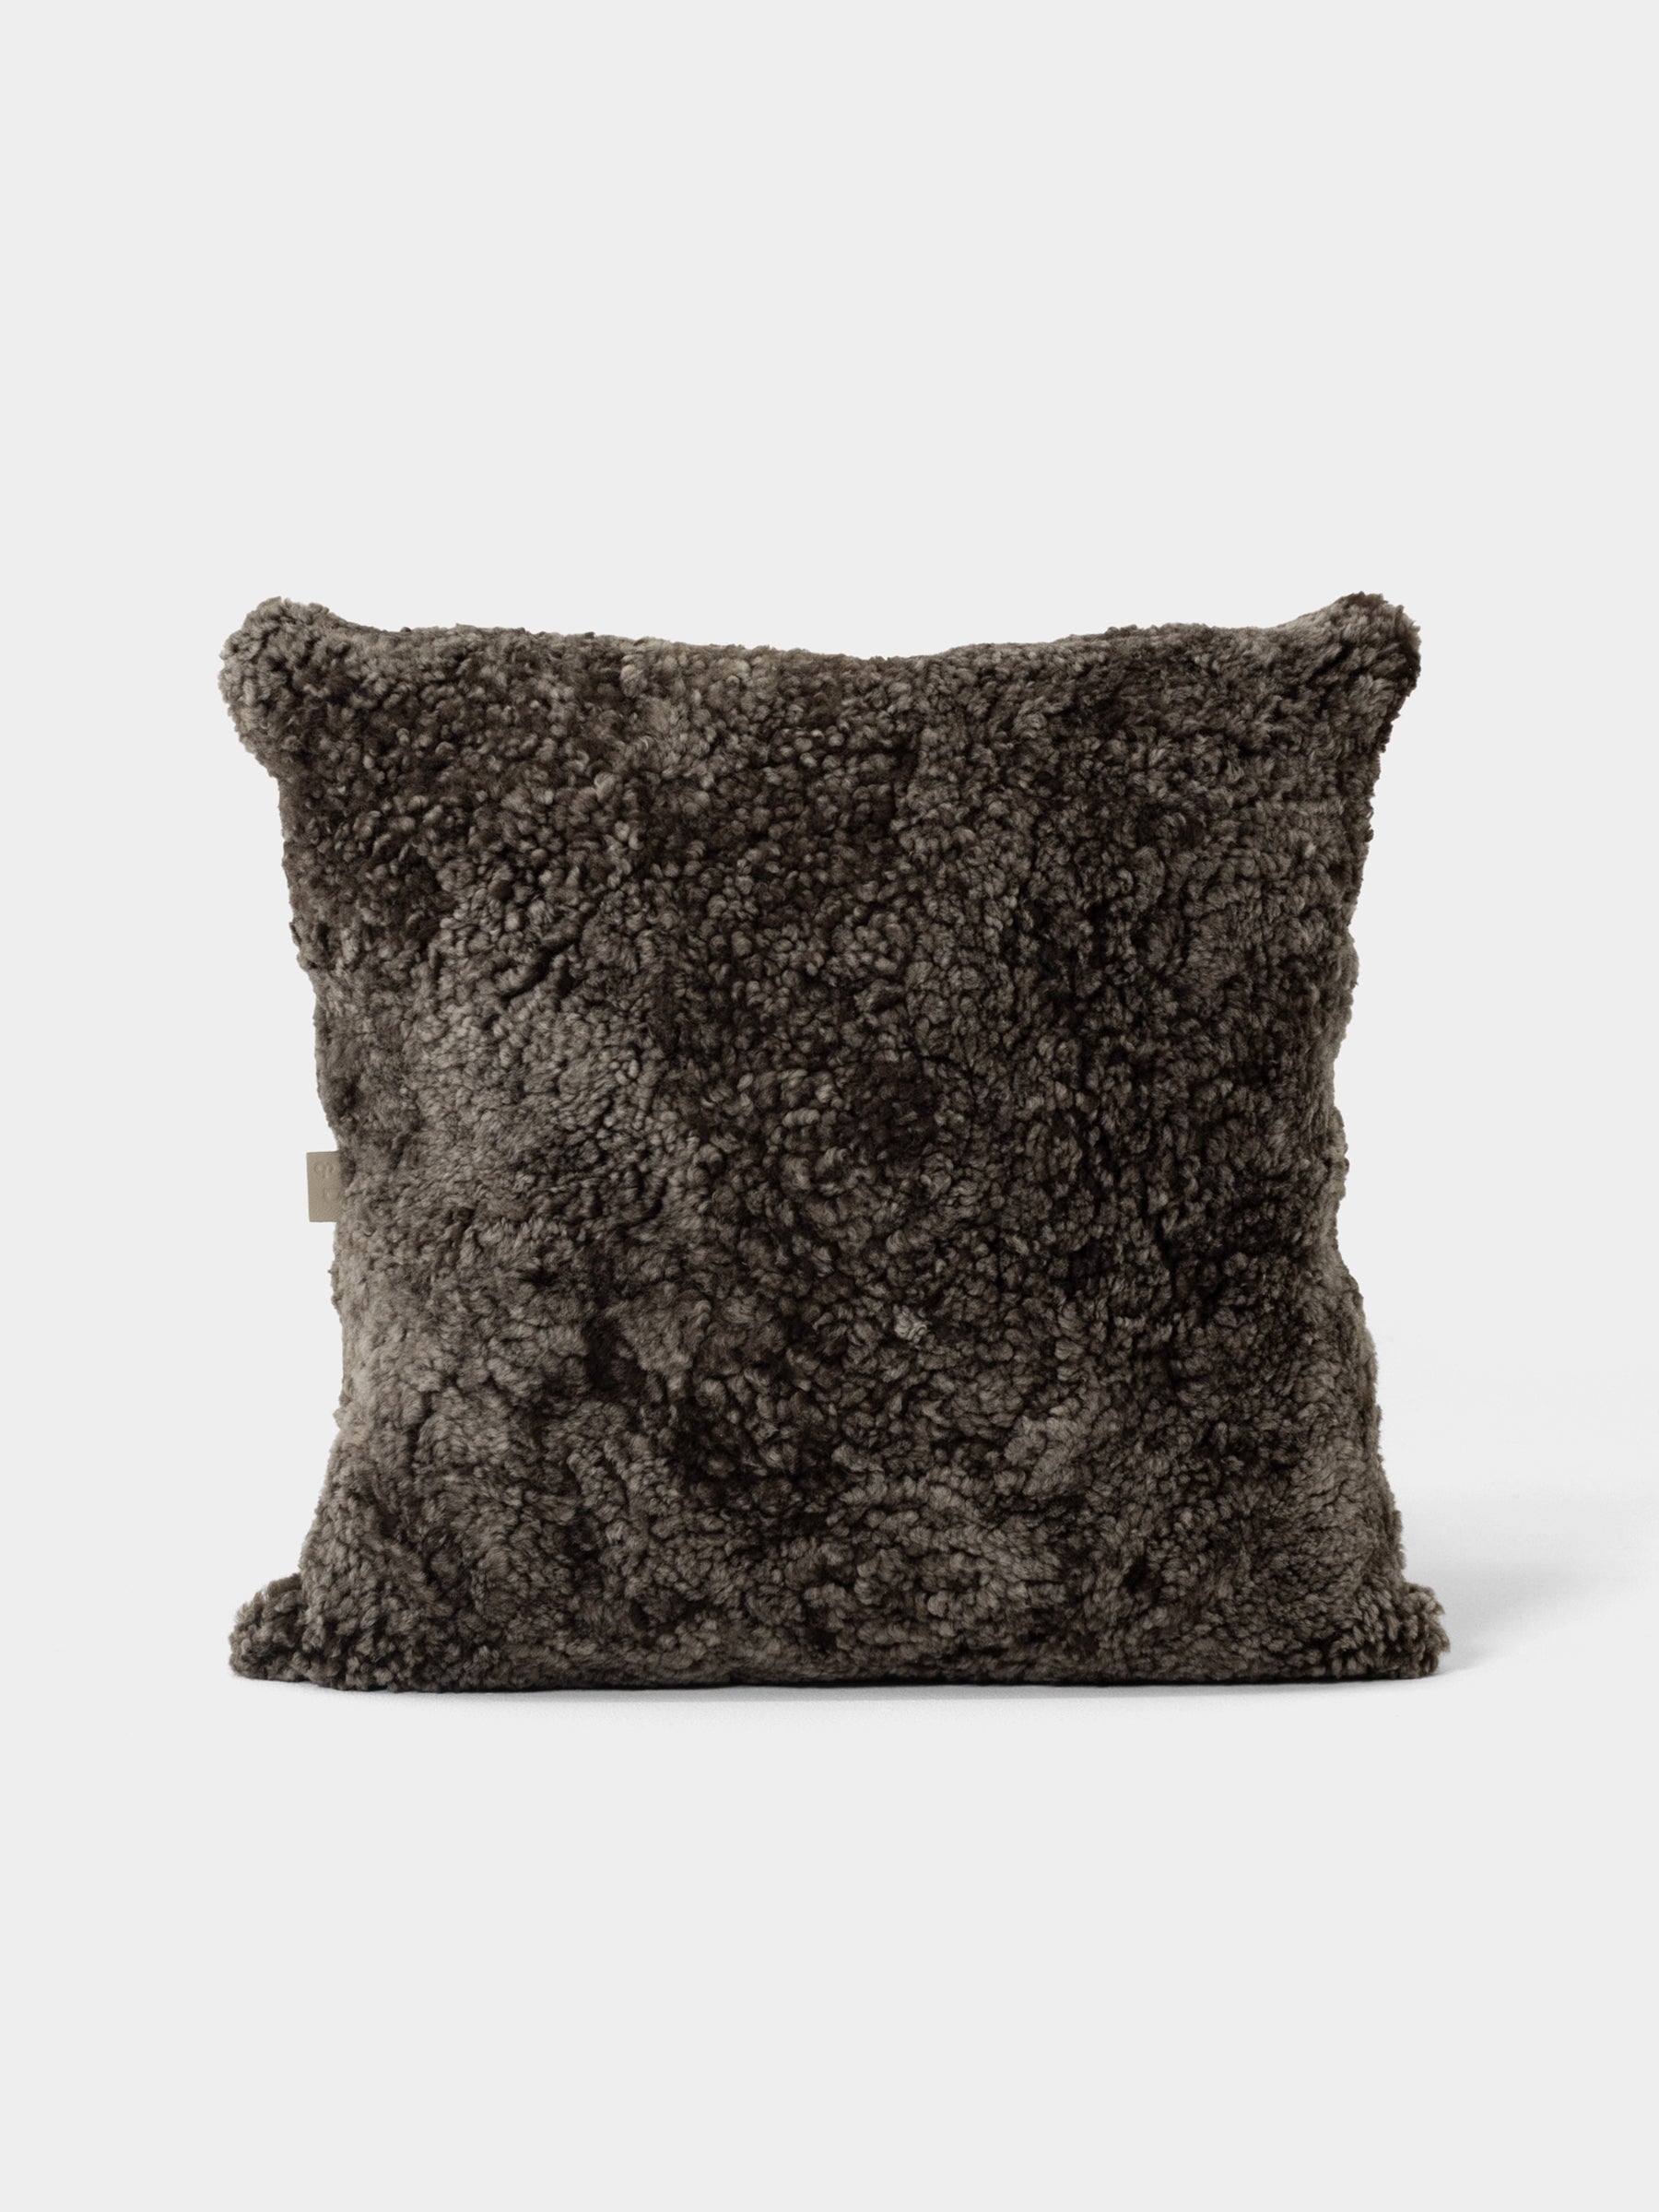 Sheepskin Cushions Made In New Zealand | Wilson & Dorset